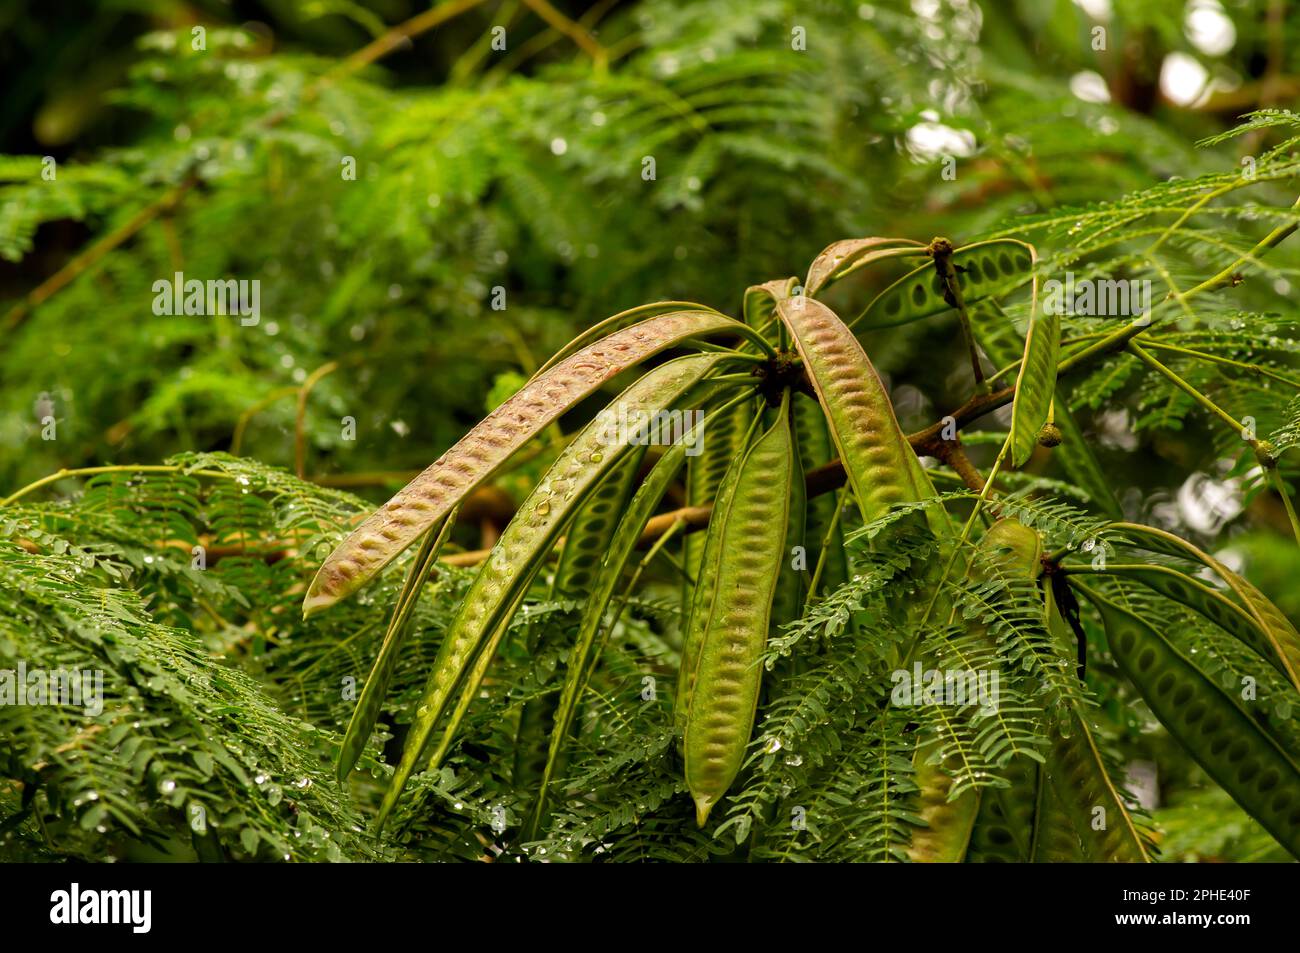 River tamarind (Leucaena leucocephala) with green blurred background Stock Photo